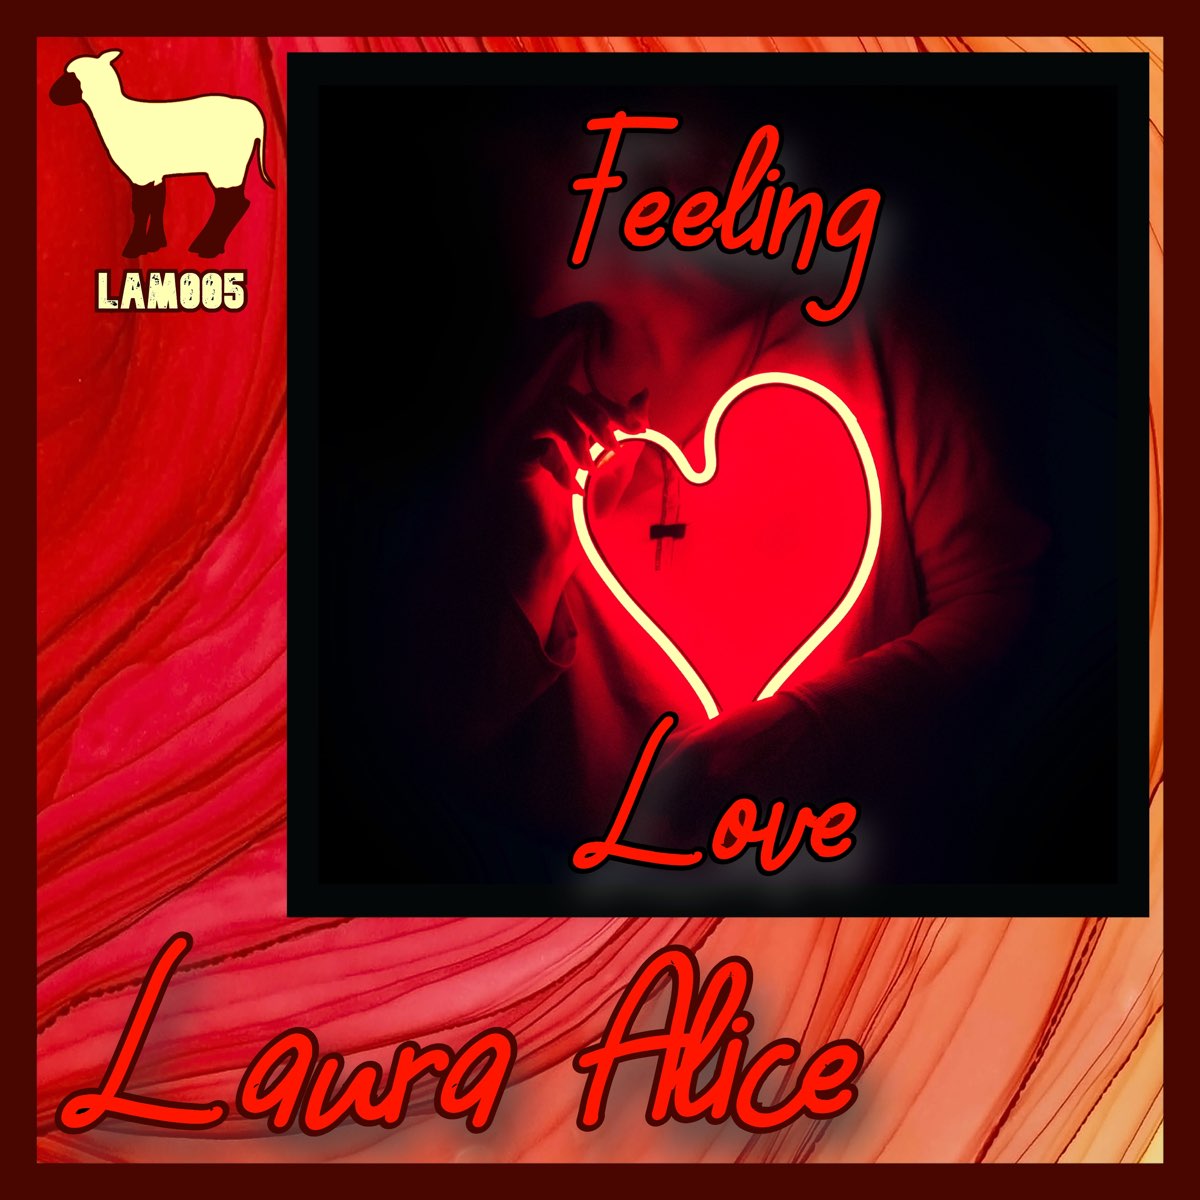 Lara one Love. Feel Love. Feel the love go